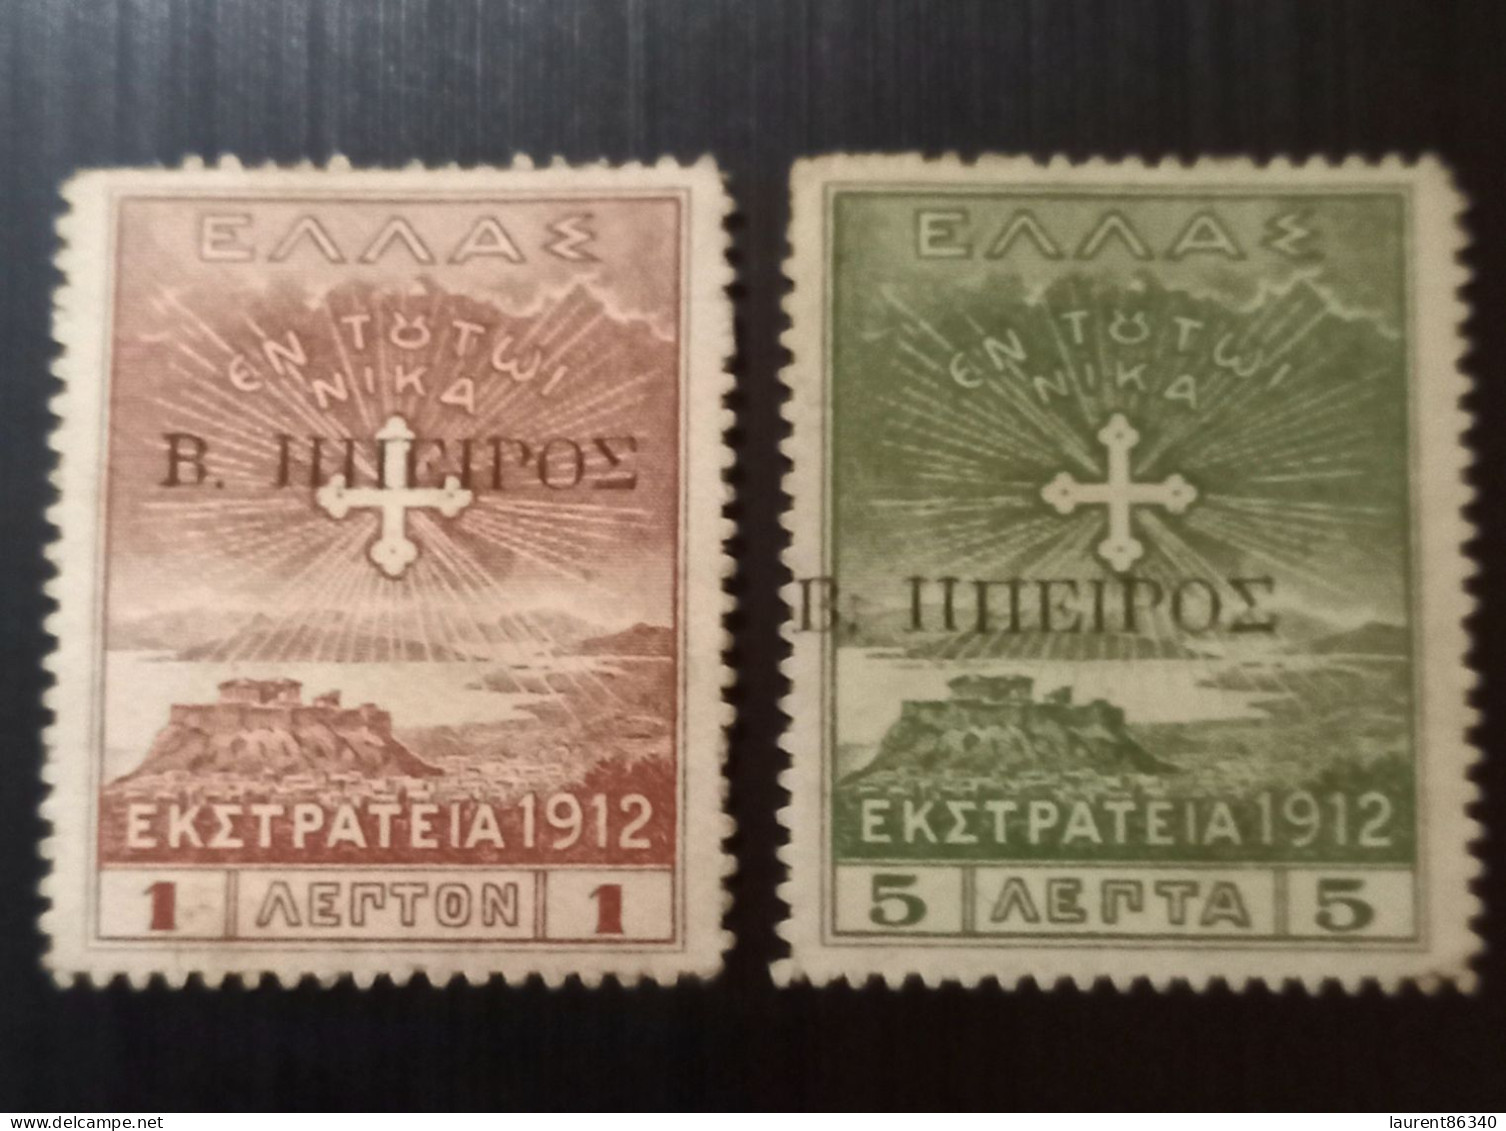 Grèce 1914 Épire Du Nord Occupation Surcharge " Β. ΗΠΕΙΡΟΣ "1915 Greek Postage Stamps Of 1913 Overprinted "B. HΠΕΙΡΟΣ - Epirus & Albanië